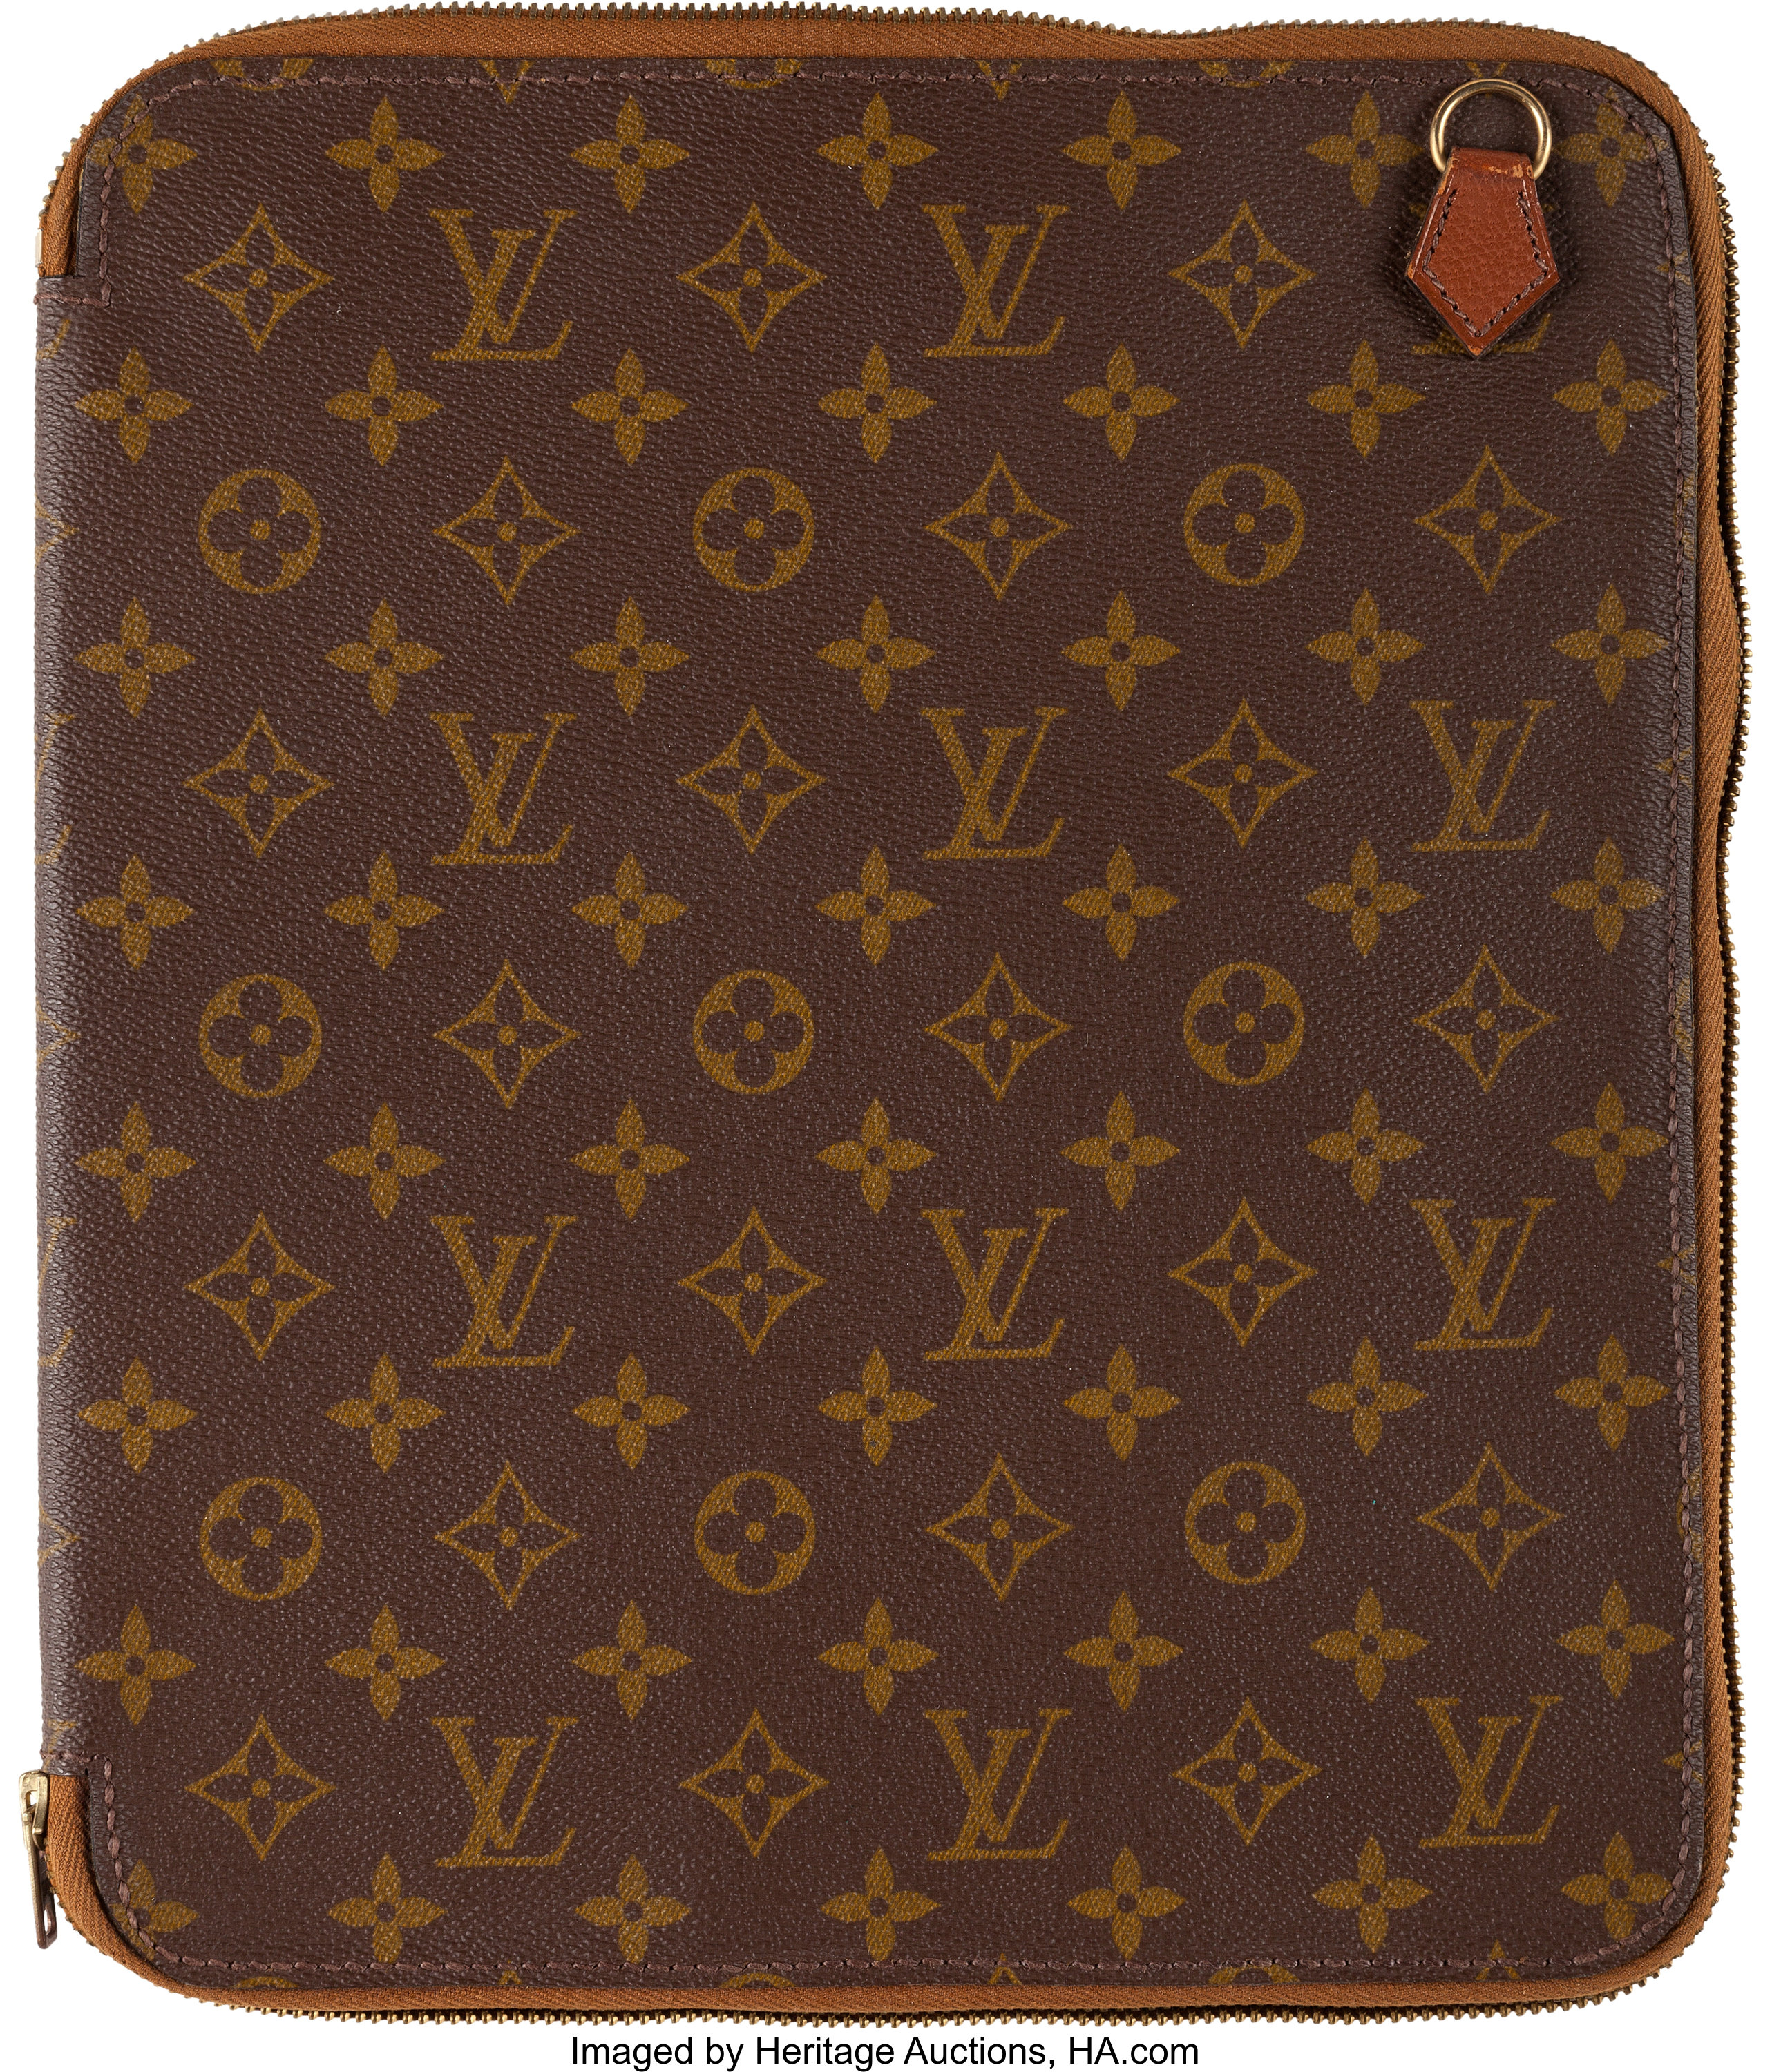 Vintage Louis Vuitton Monogram Portfolio or Laptop Case With 